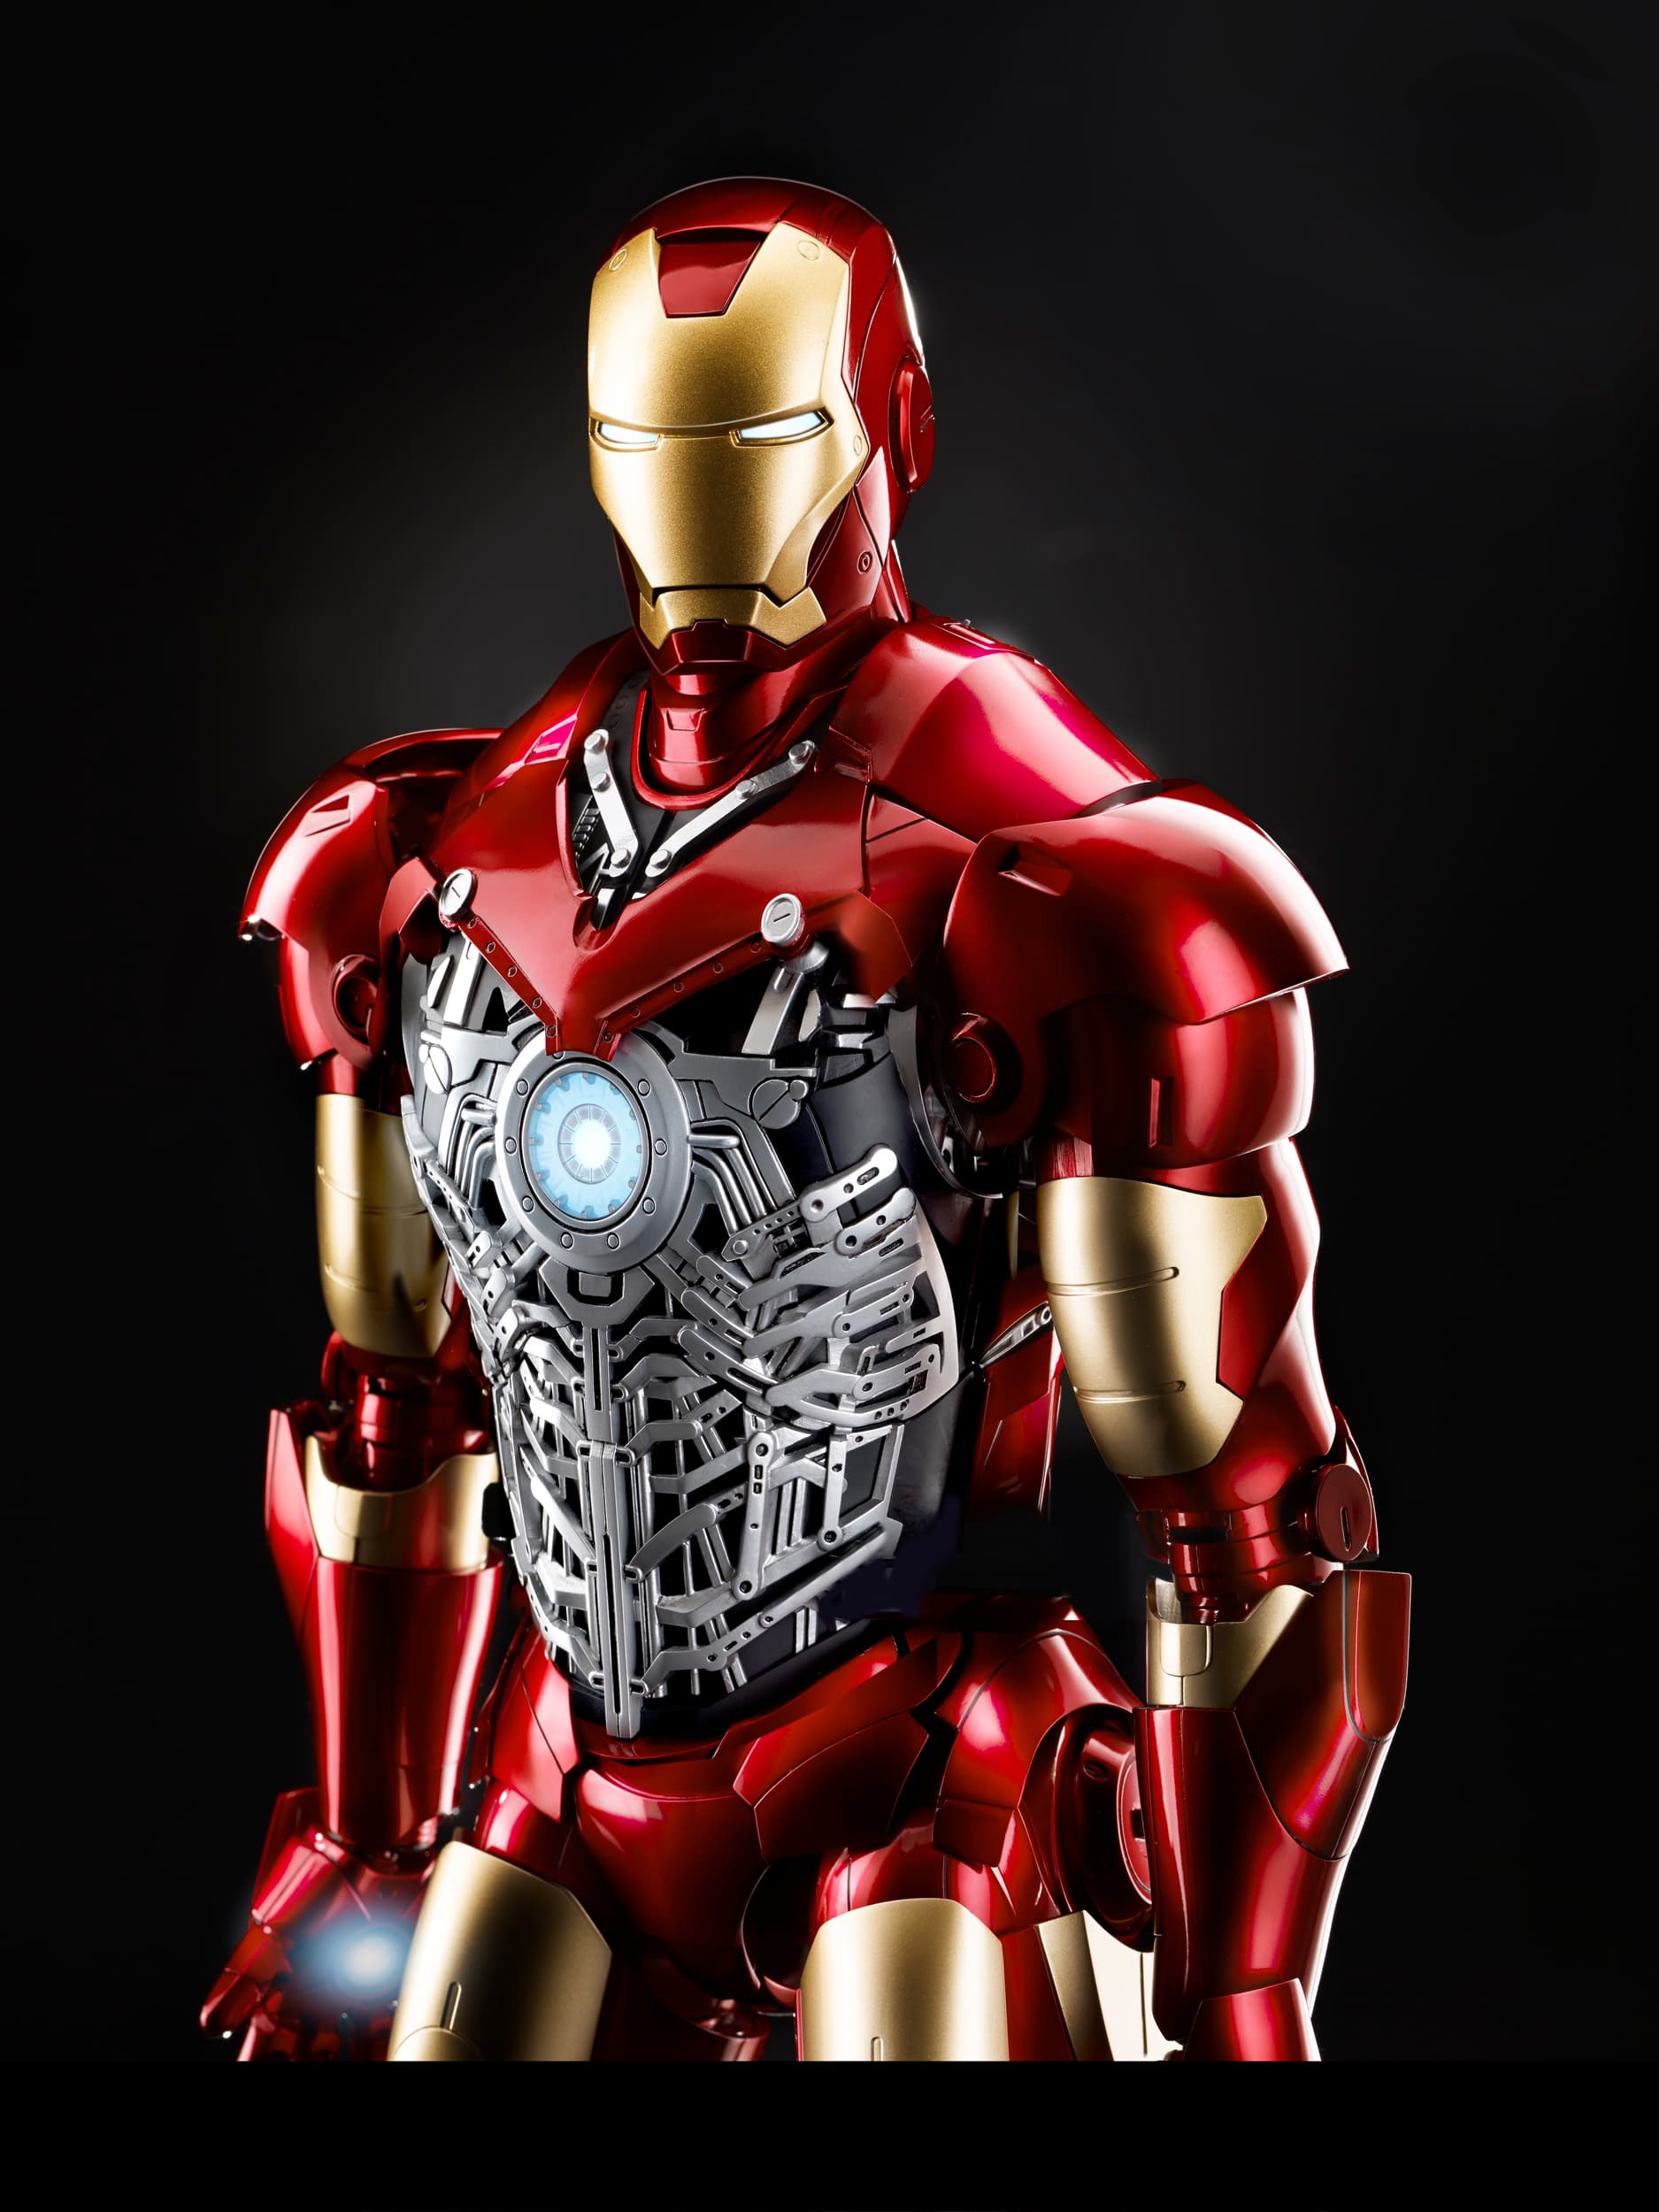 Marvel x Fanhome’s Iron Man Mach III Armor